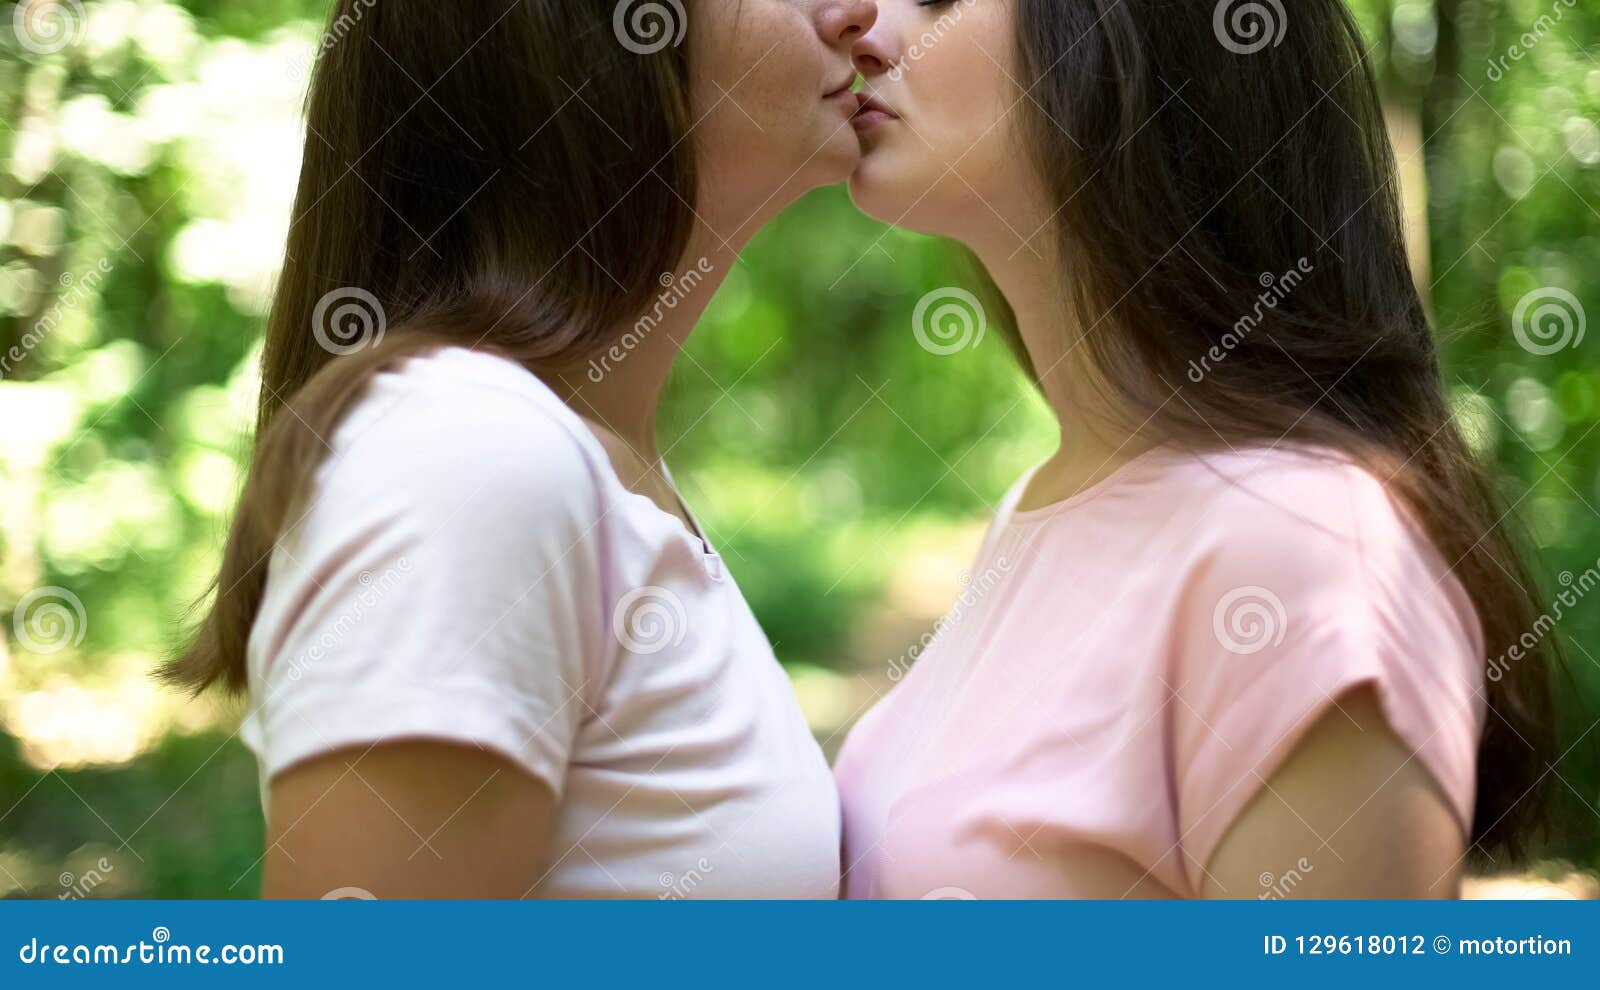 Lesbians Kissing Sex Passionate Stock Photos photo image